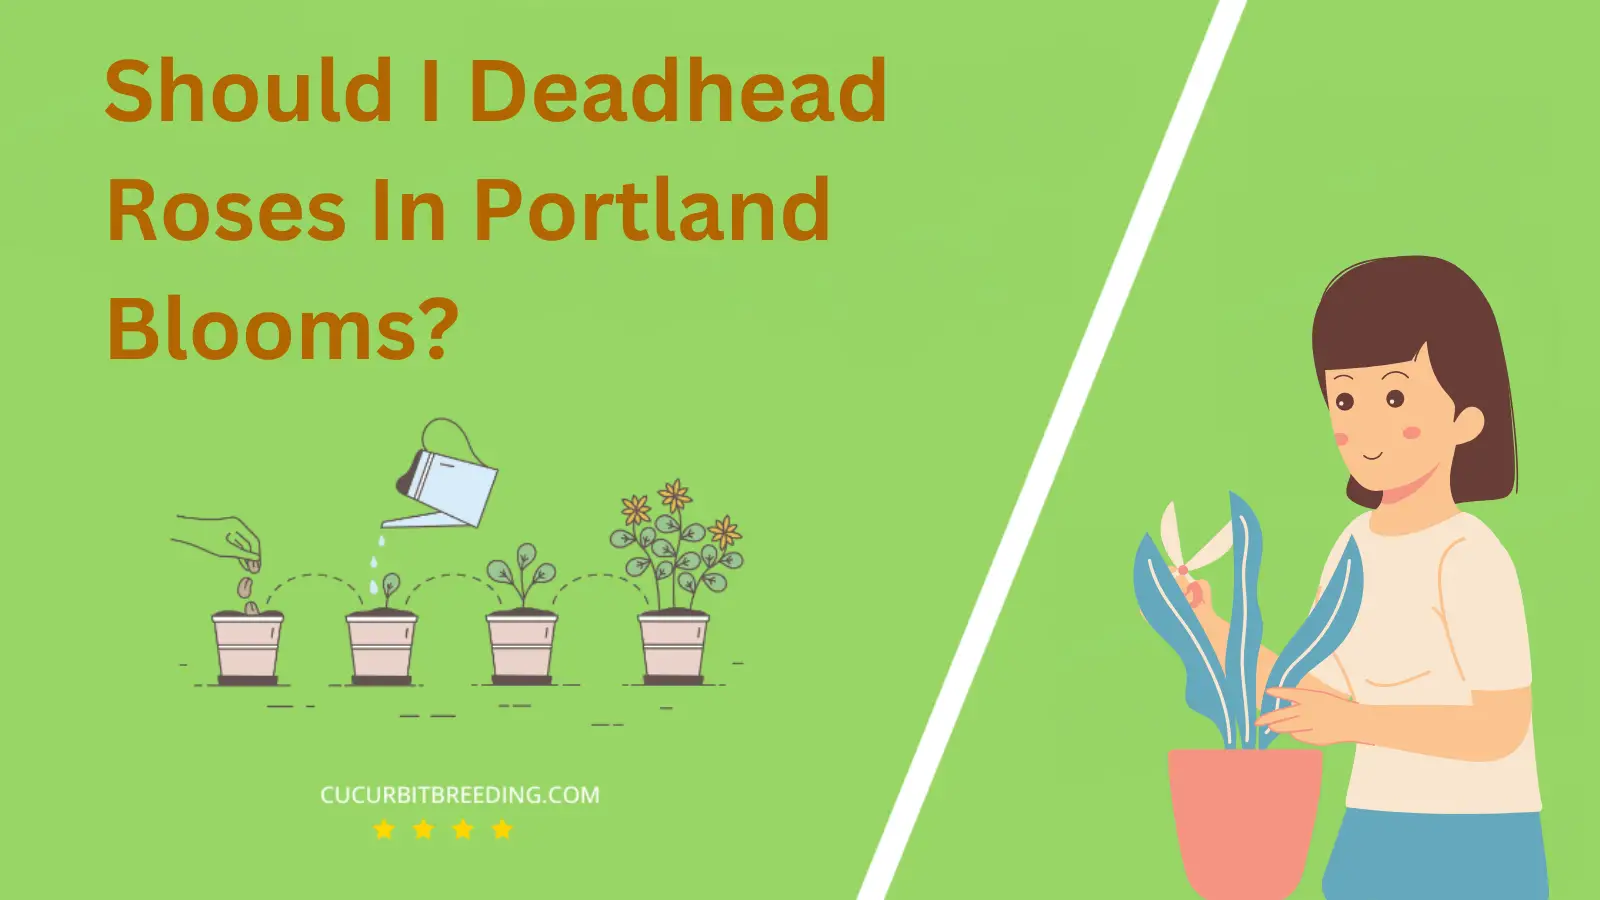 Should I Deadhead Roses In Portland Blooms?